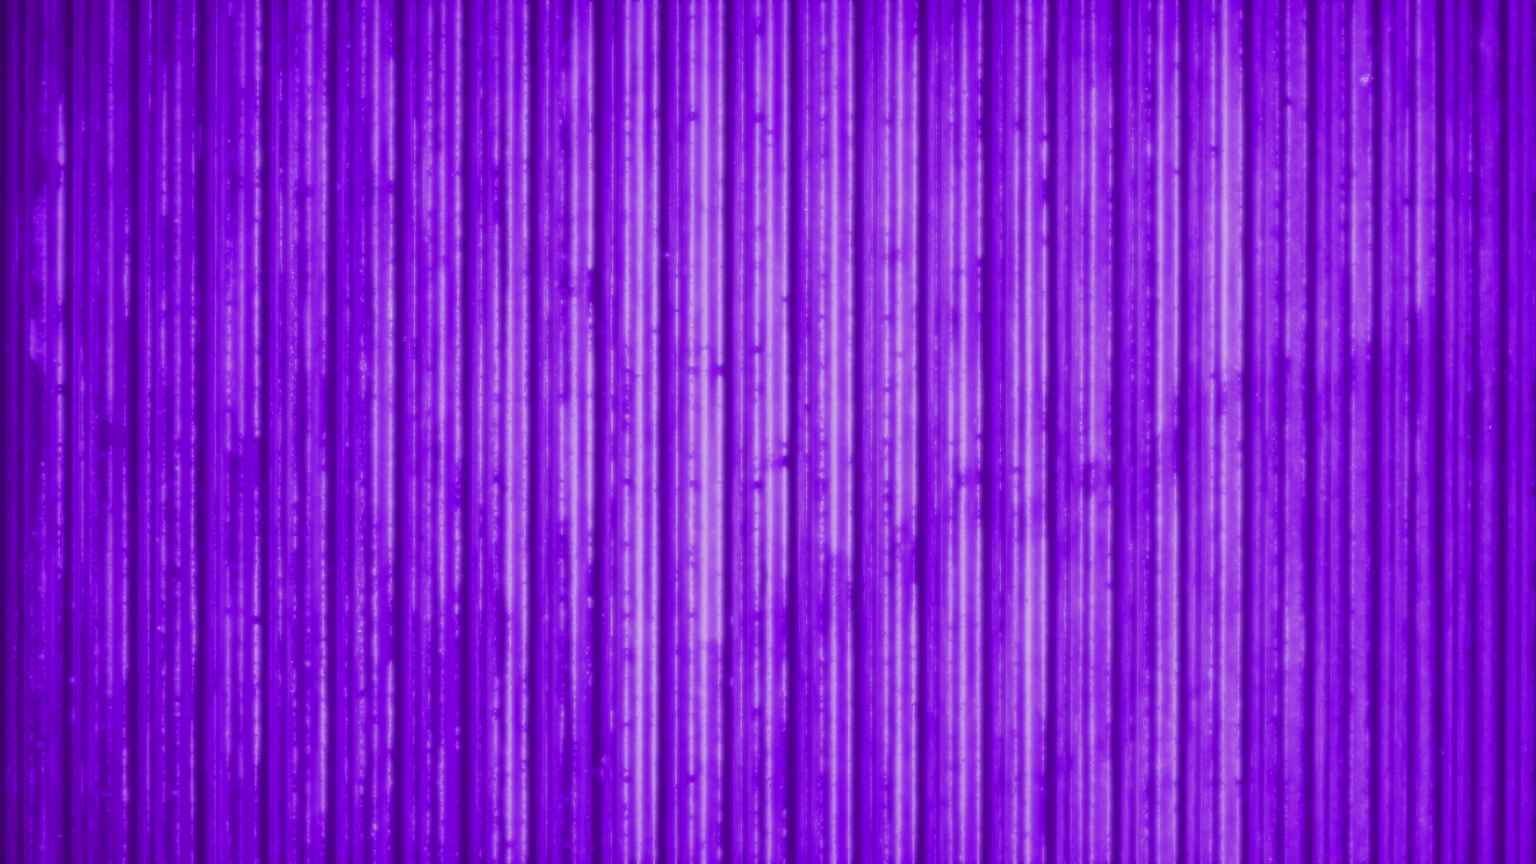 4K Purple Motion Background || VFX Free To Use 4K Screensaver || FREE DOWNLOAD